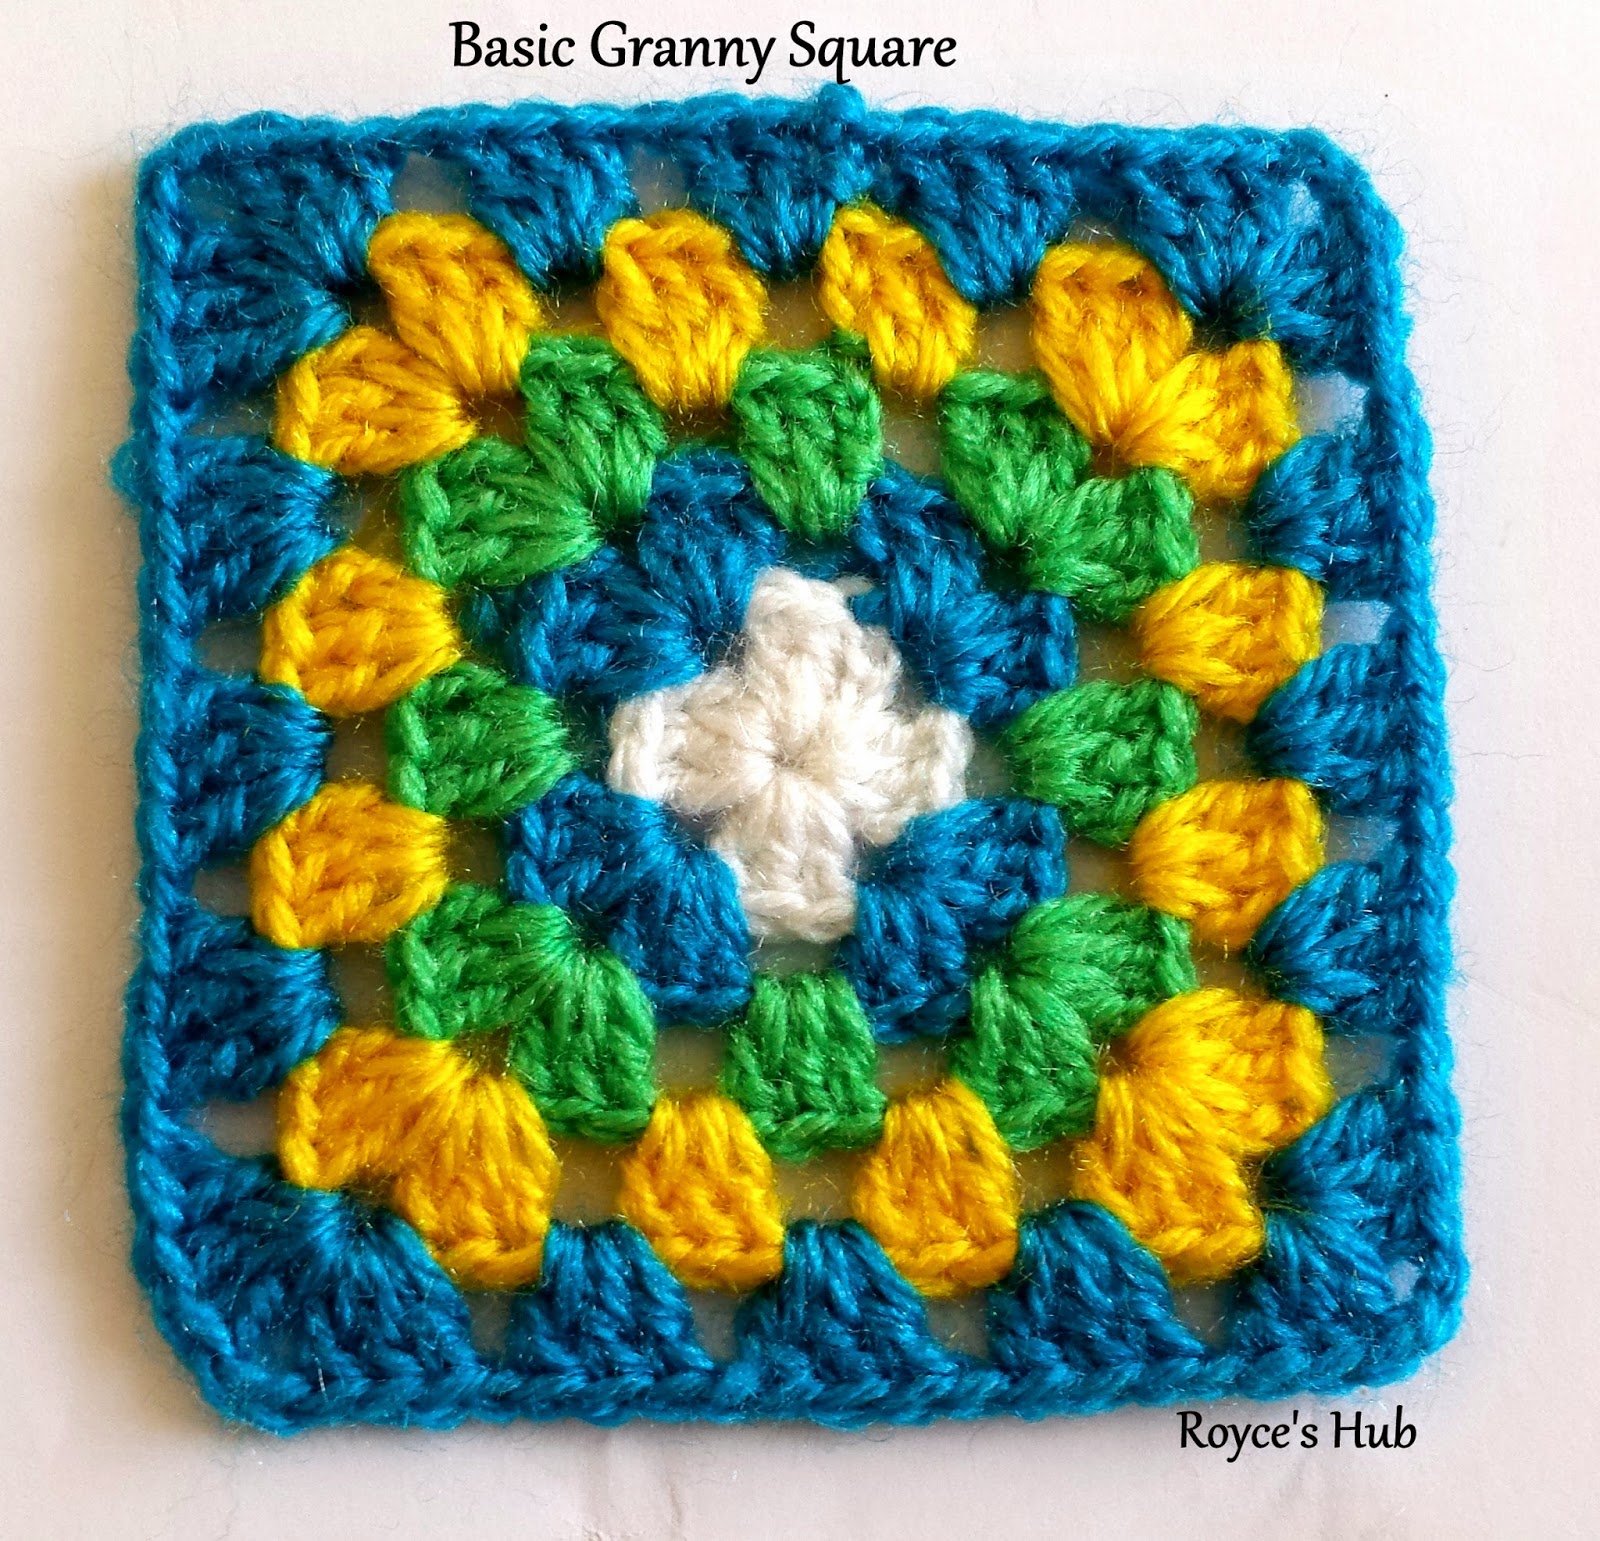 http://roycedavids.blogspot.ae/2014/12/basic-granny-square.html